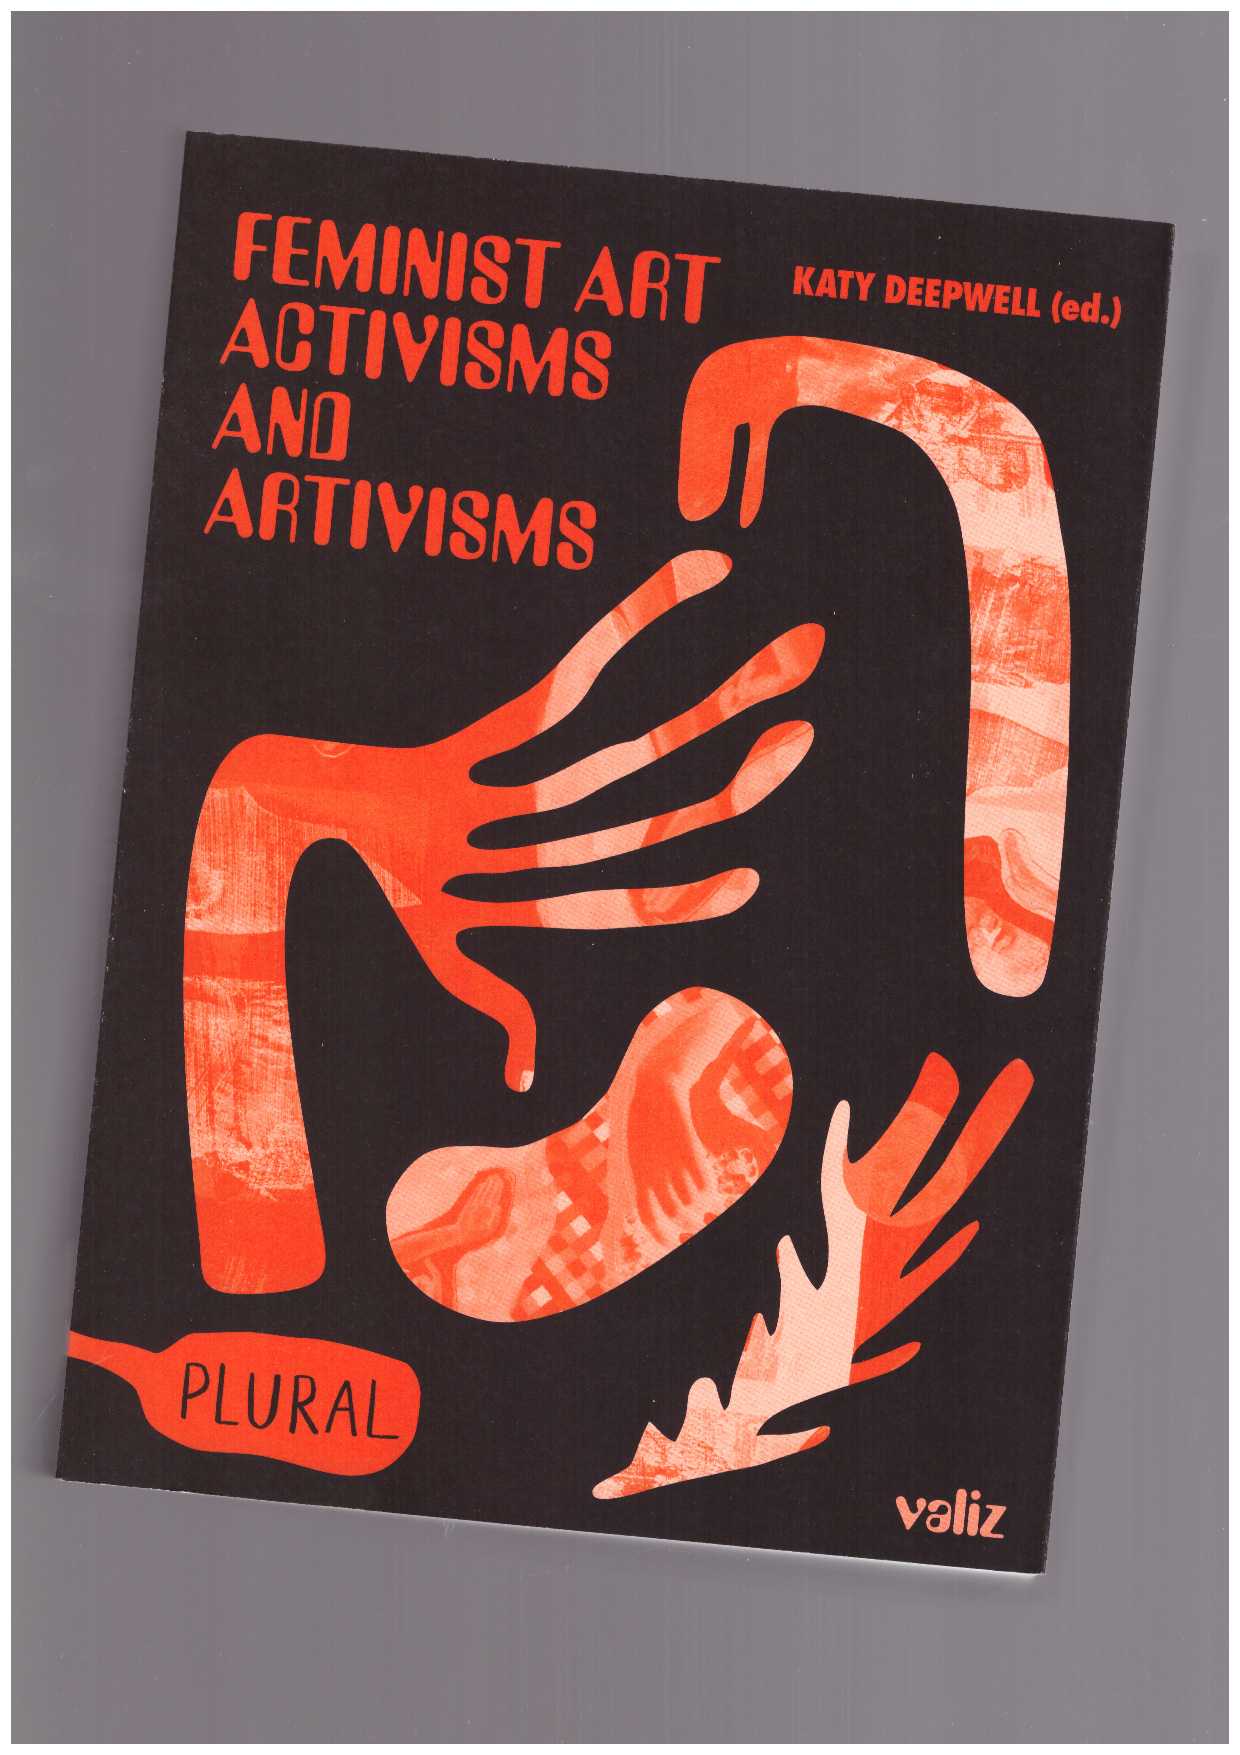 DEEPWELL, Katy (ed.) - Feminist Art Activisms and Artivisms